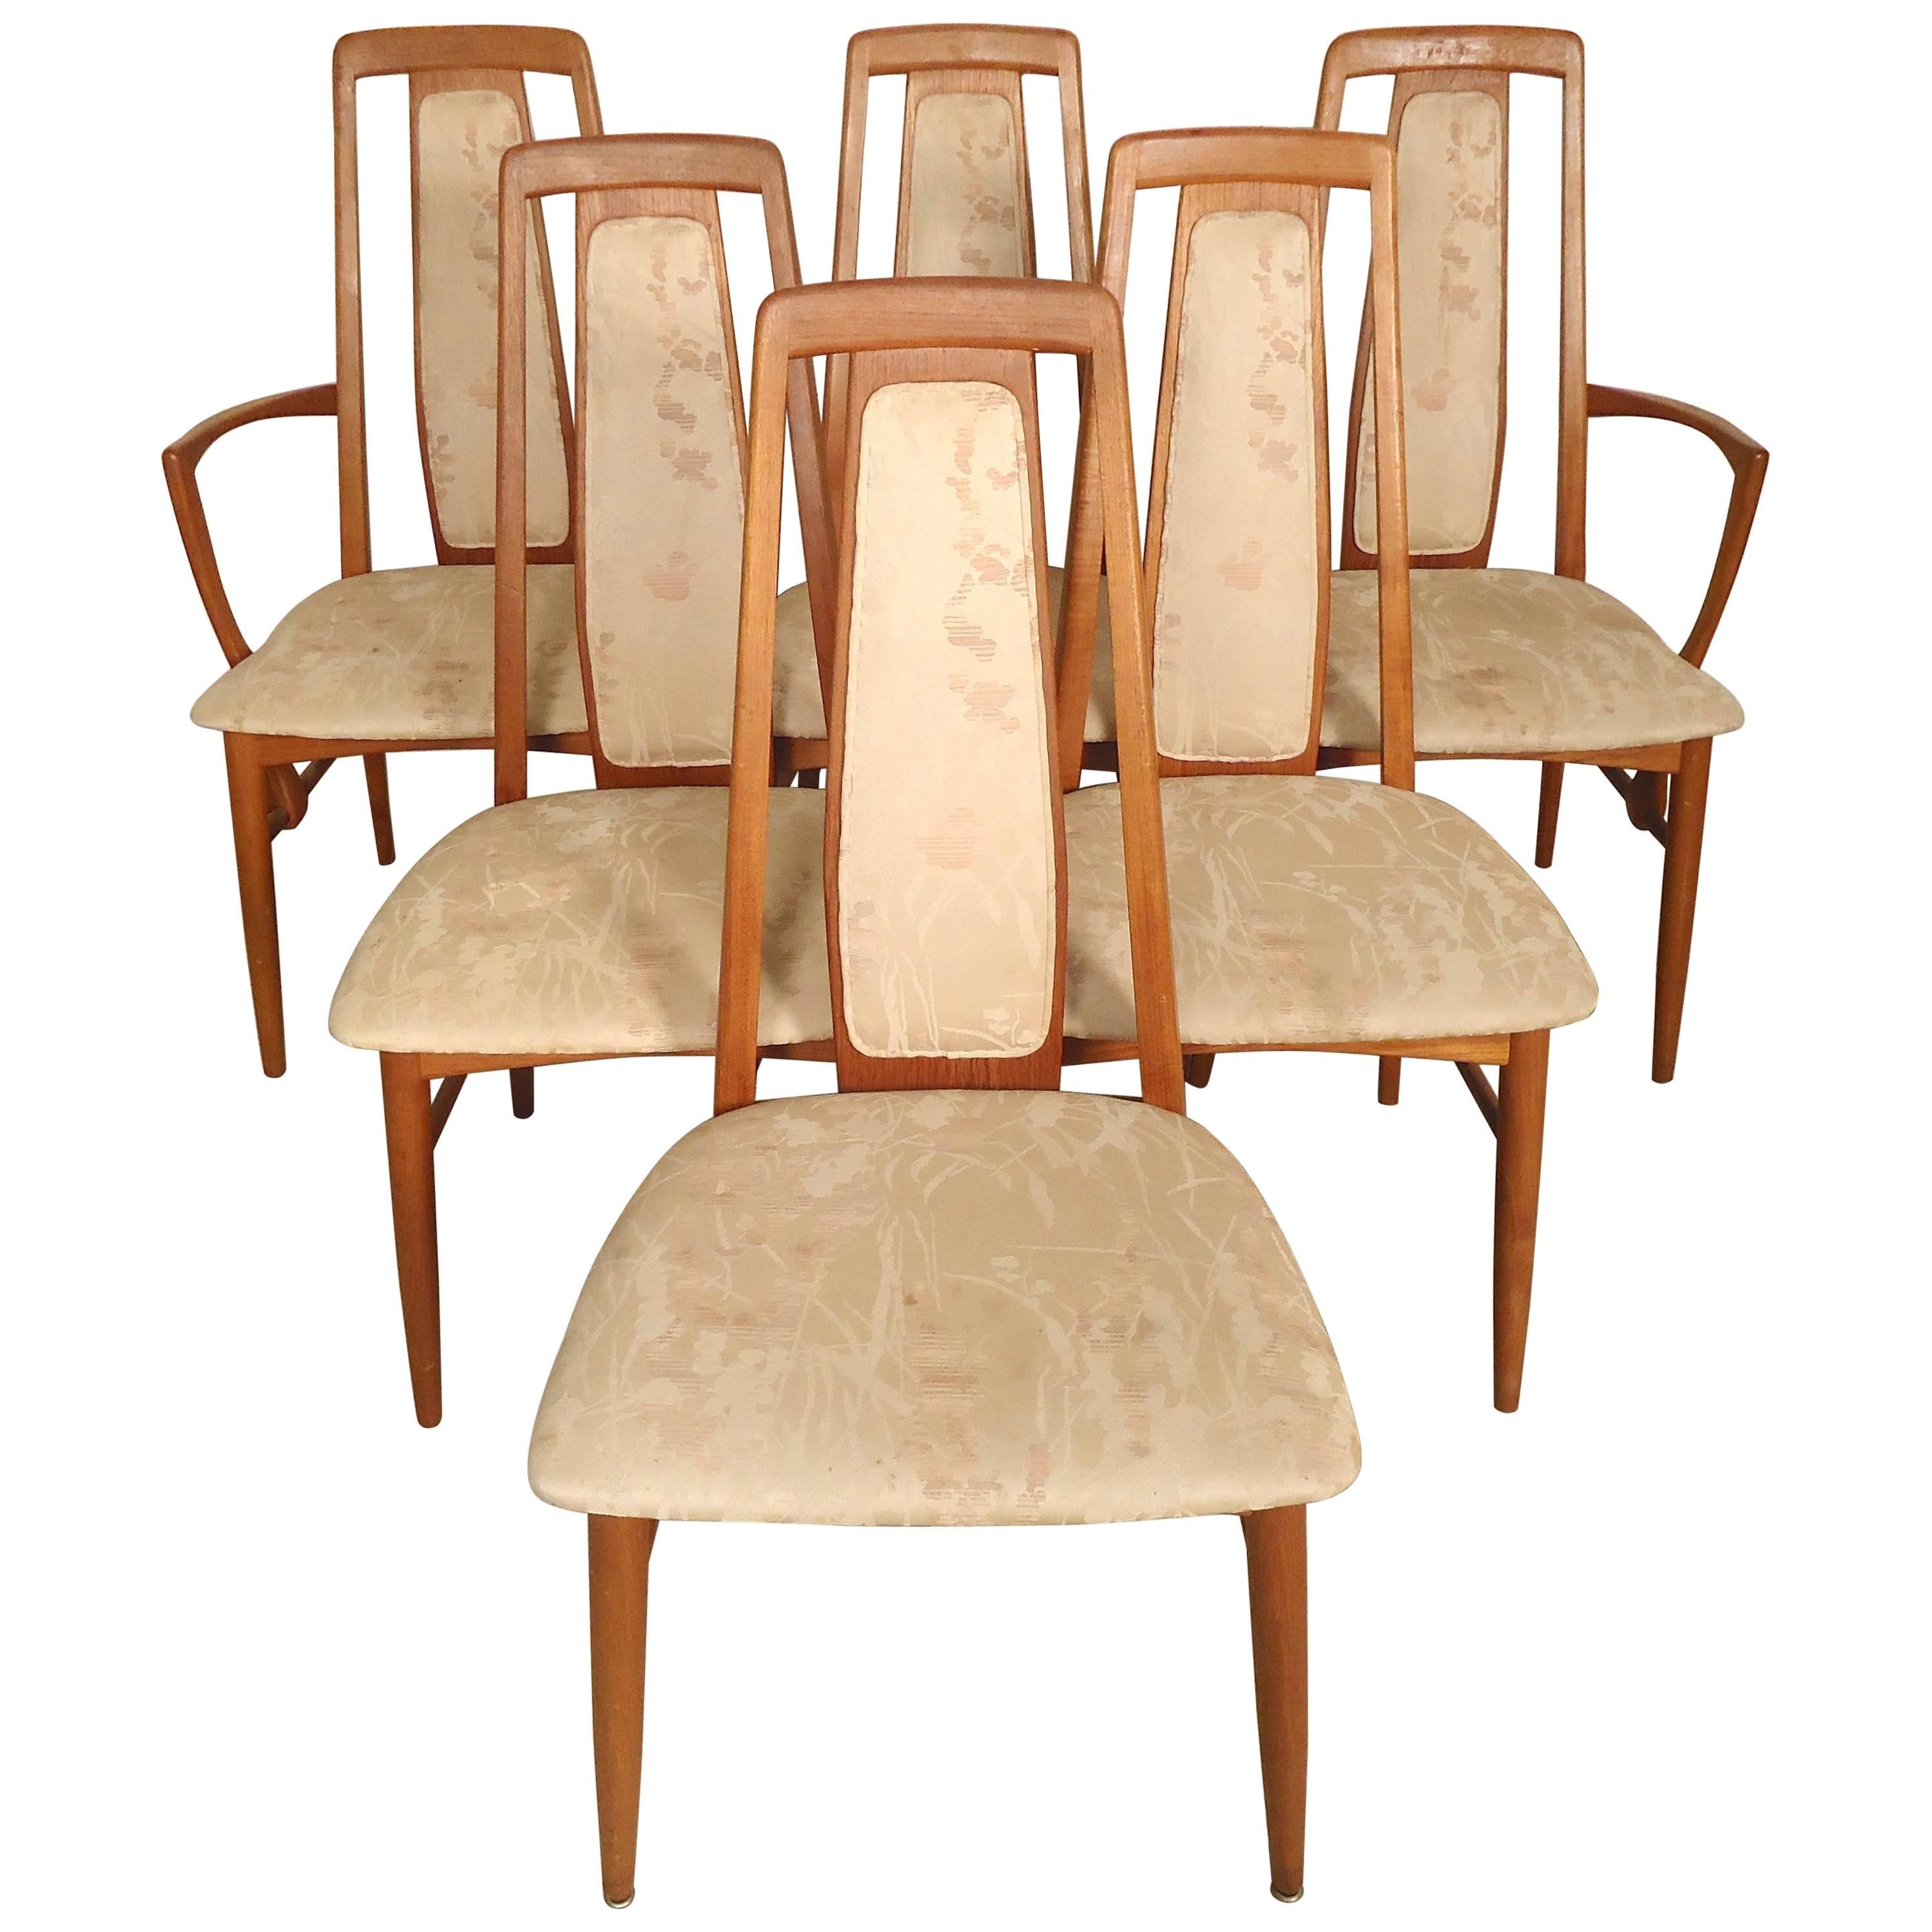 Six Danish Modern Chairs by Niels Kofoed